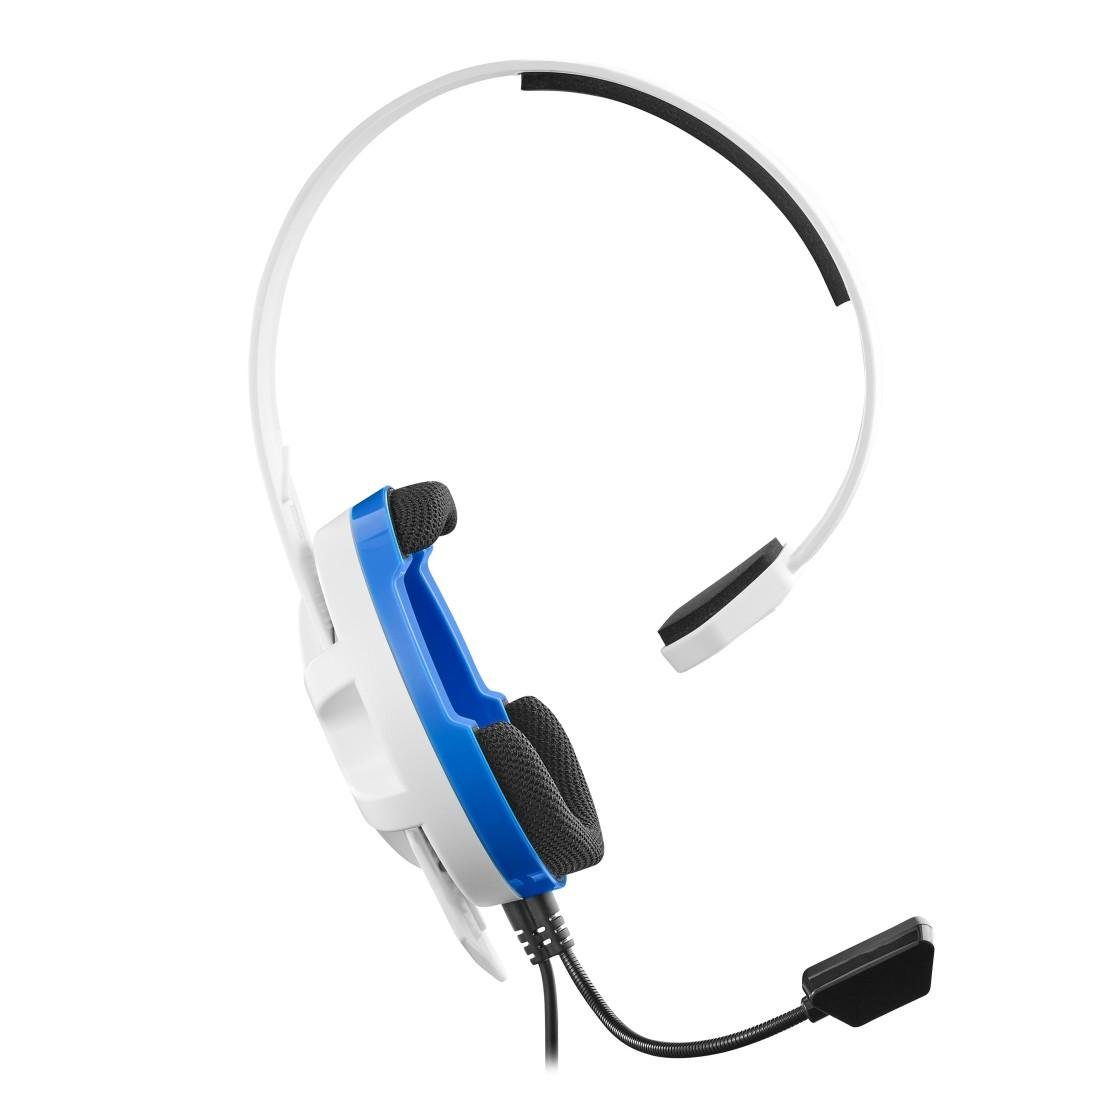 Recon Turtle Chat Beach weiß/blau Gaming-Headset